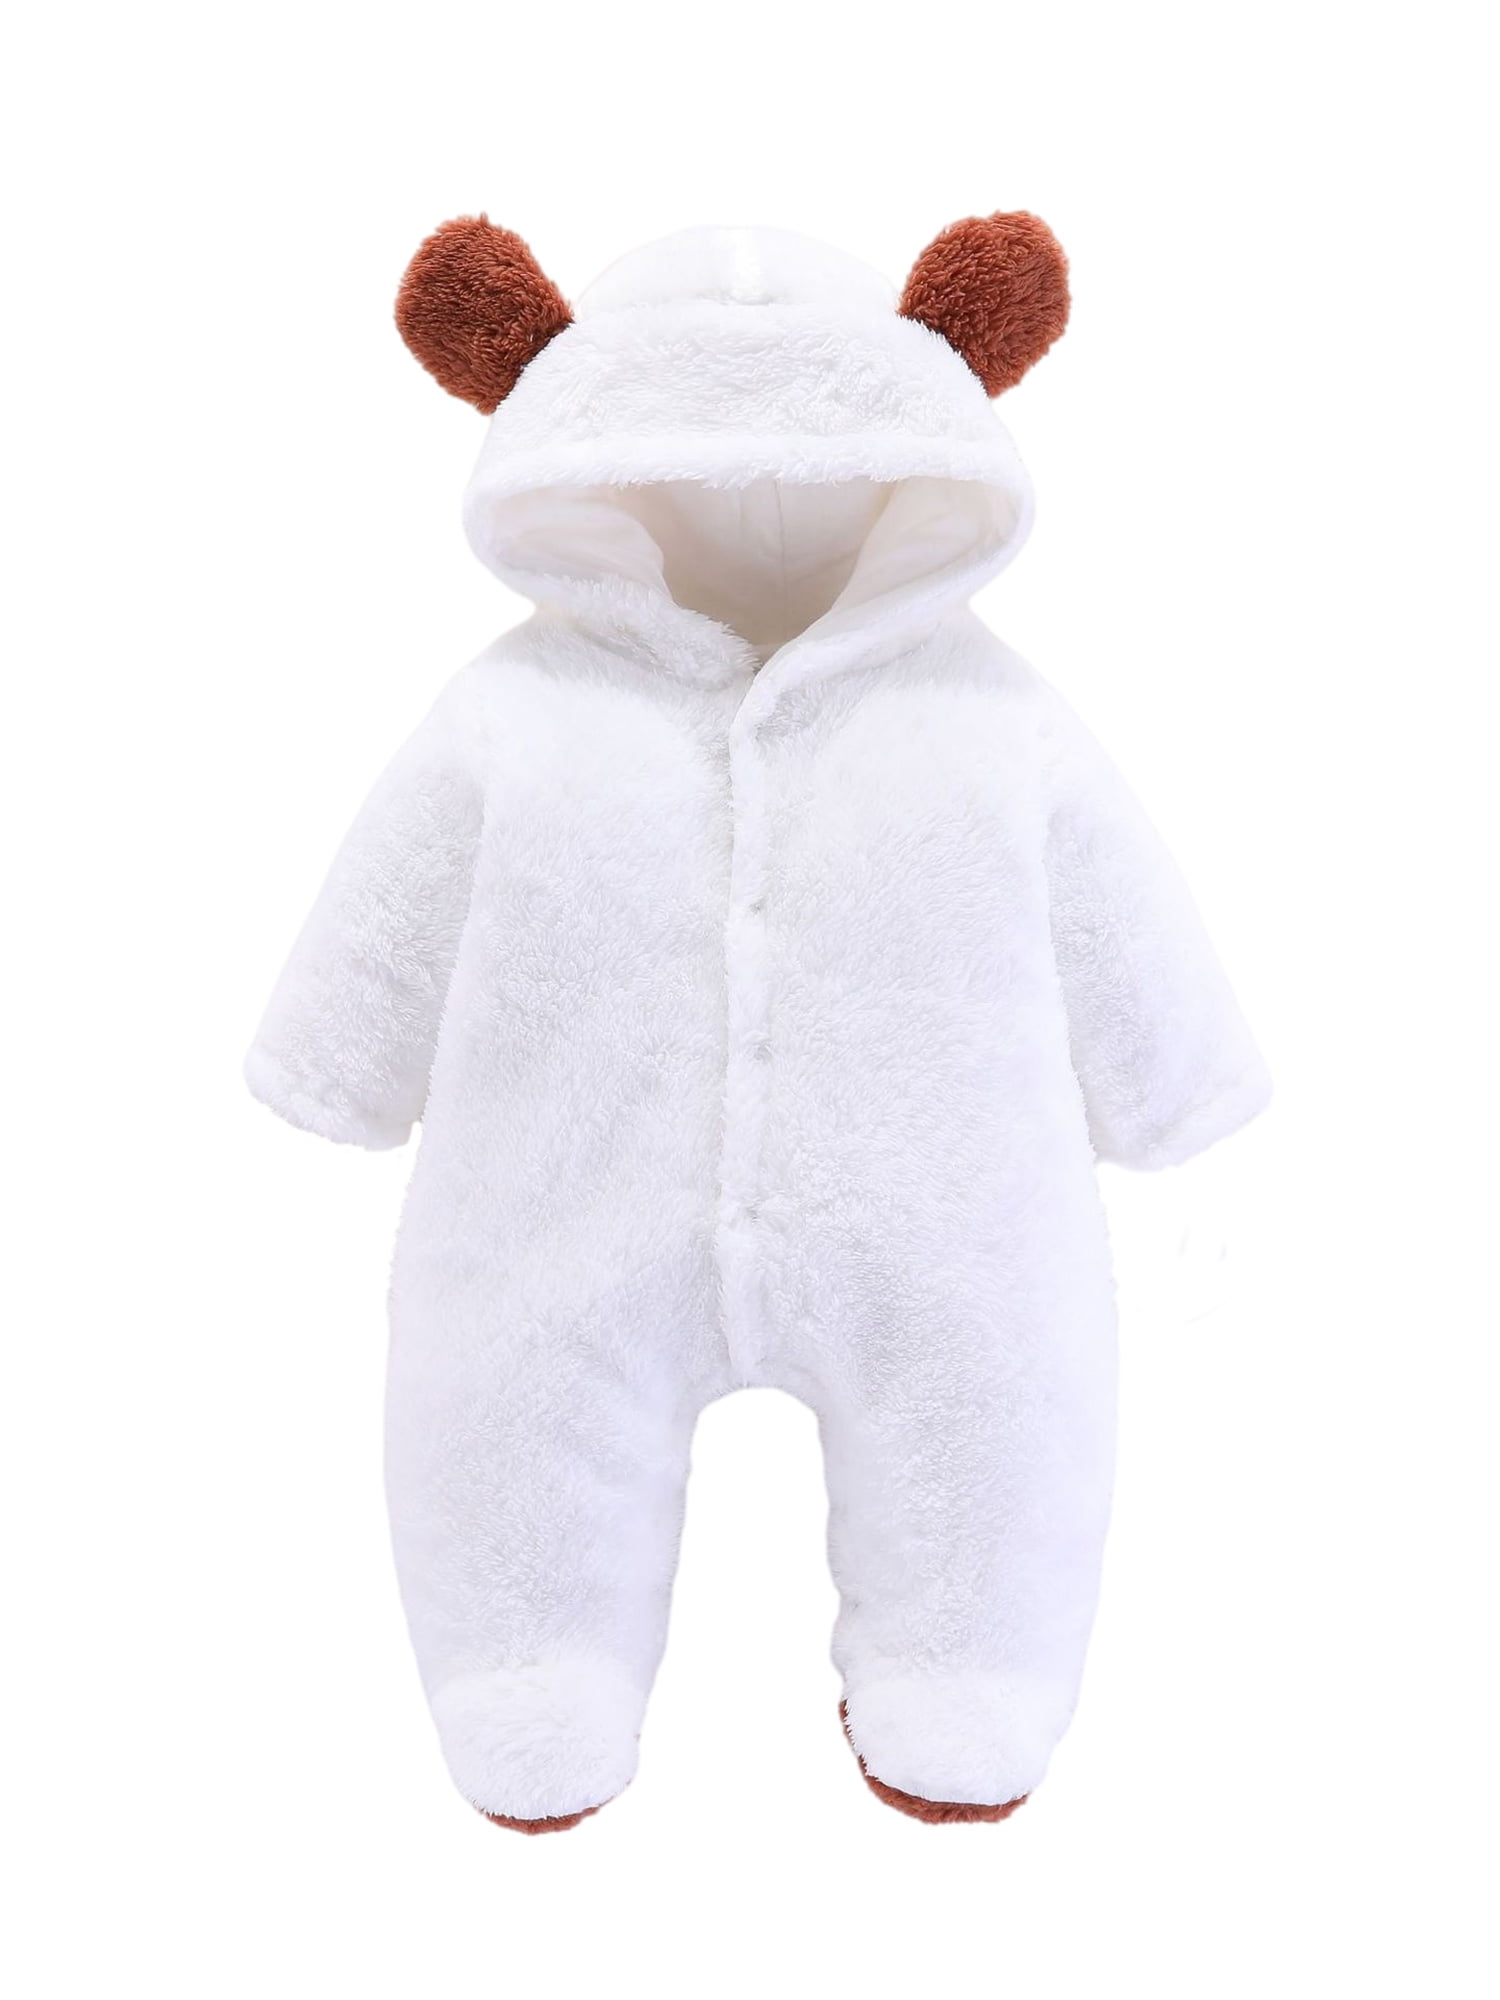 JiAmy Baby Winter Hooded Romper Fleece Snowsuit Warm Jumpsuit Outfit 0-12 Months